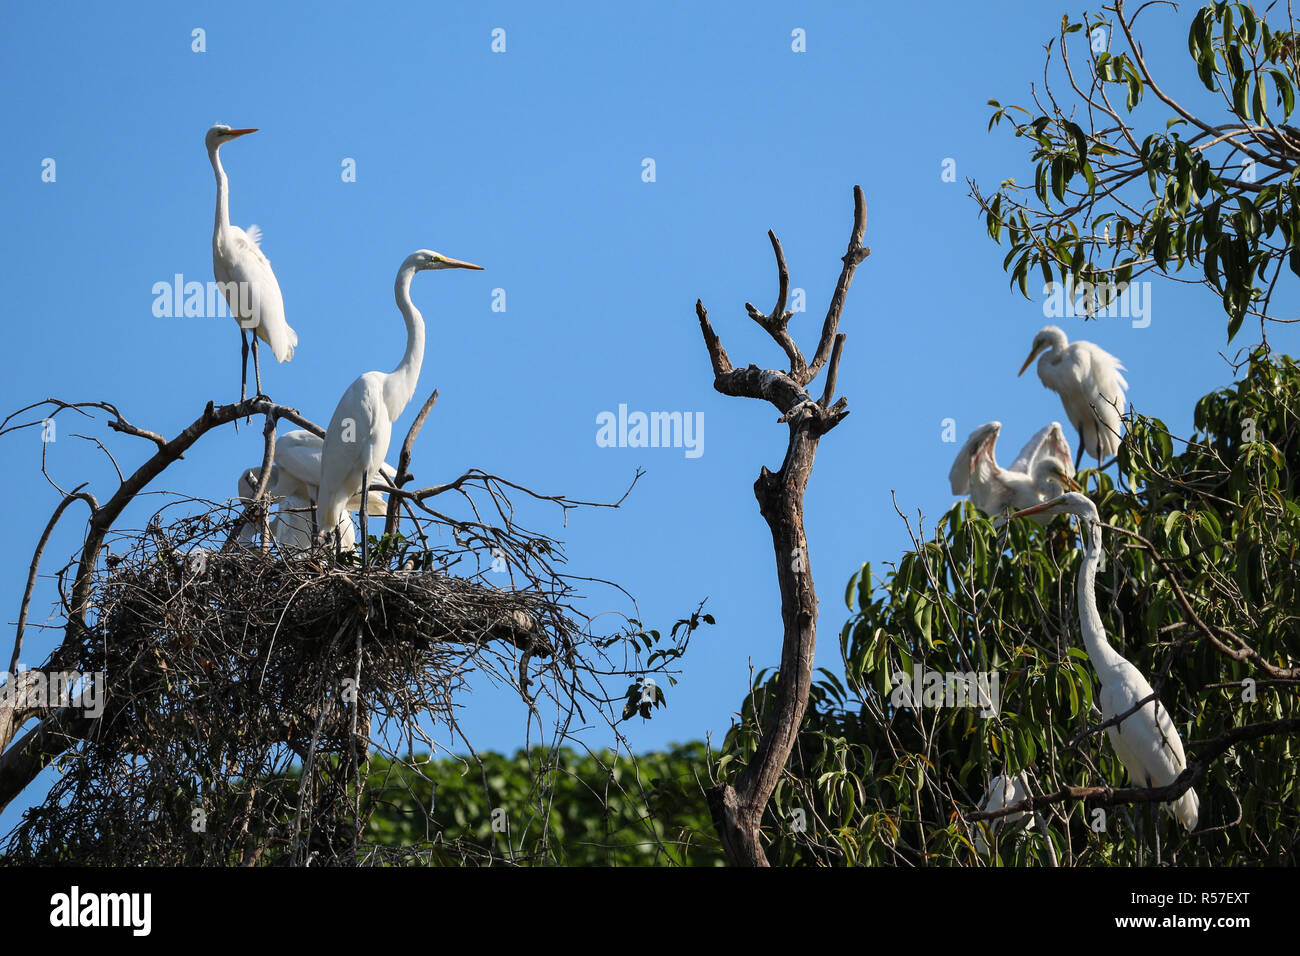 Heron, large white bird. Herons nest in tree, in an urban area near the coast of Rio de Janeiro, Brazil. Stock Photo